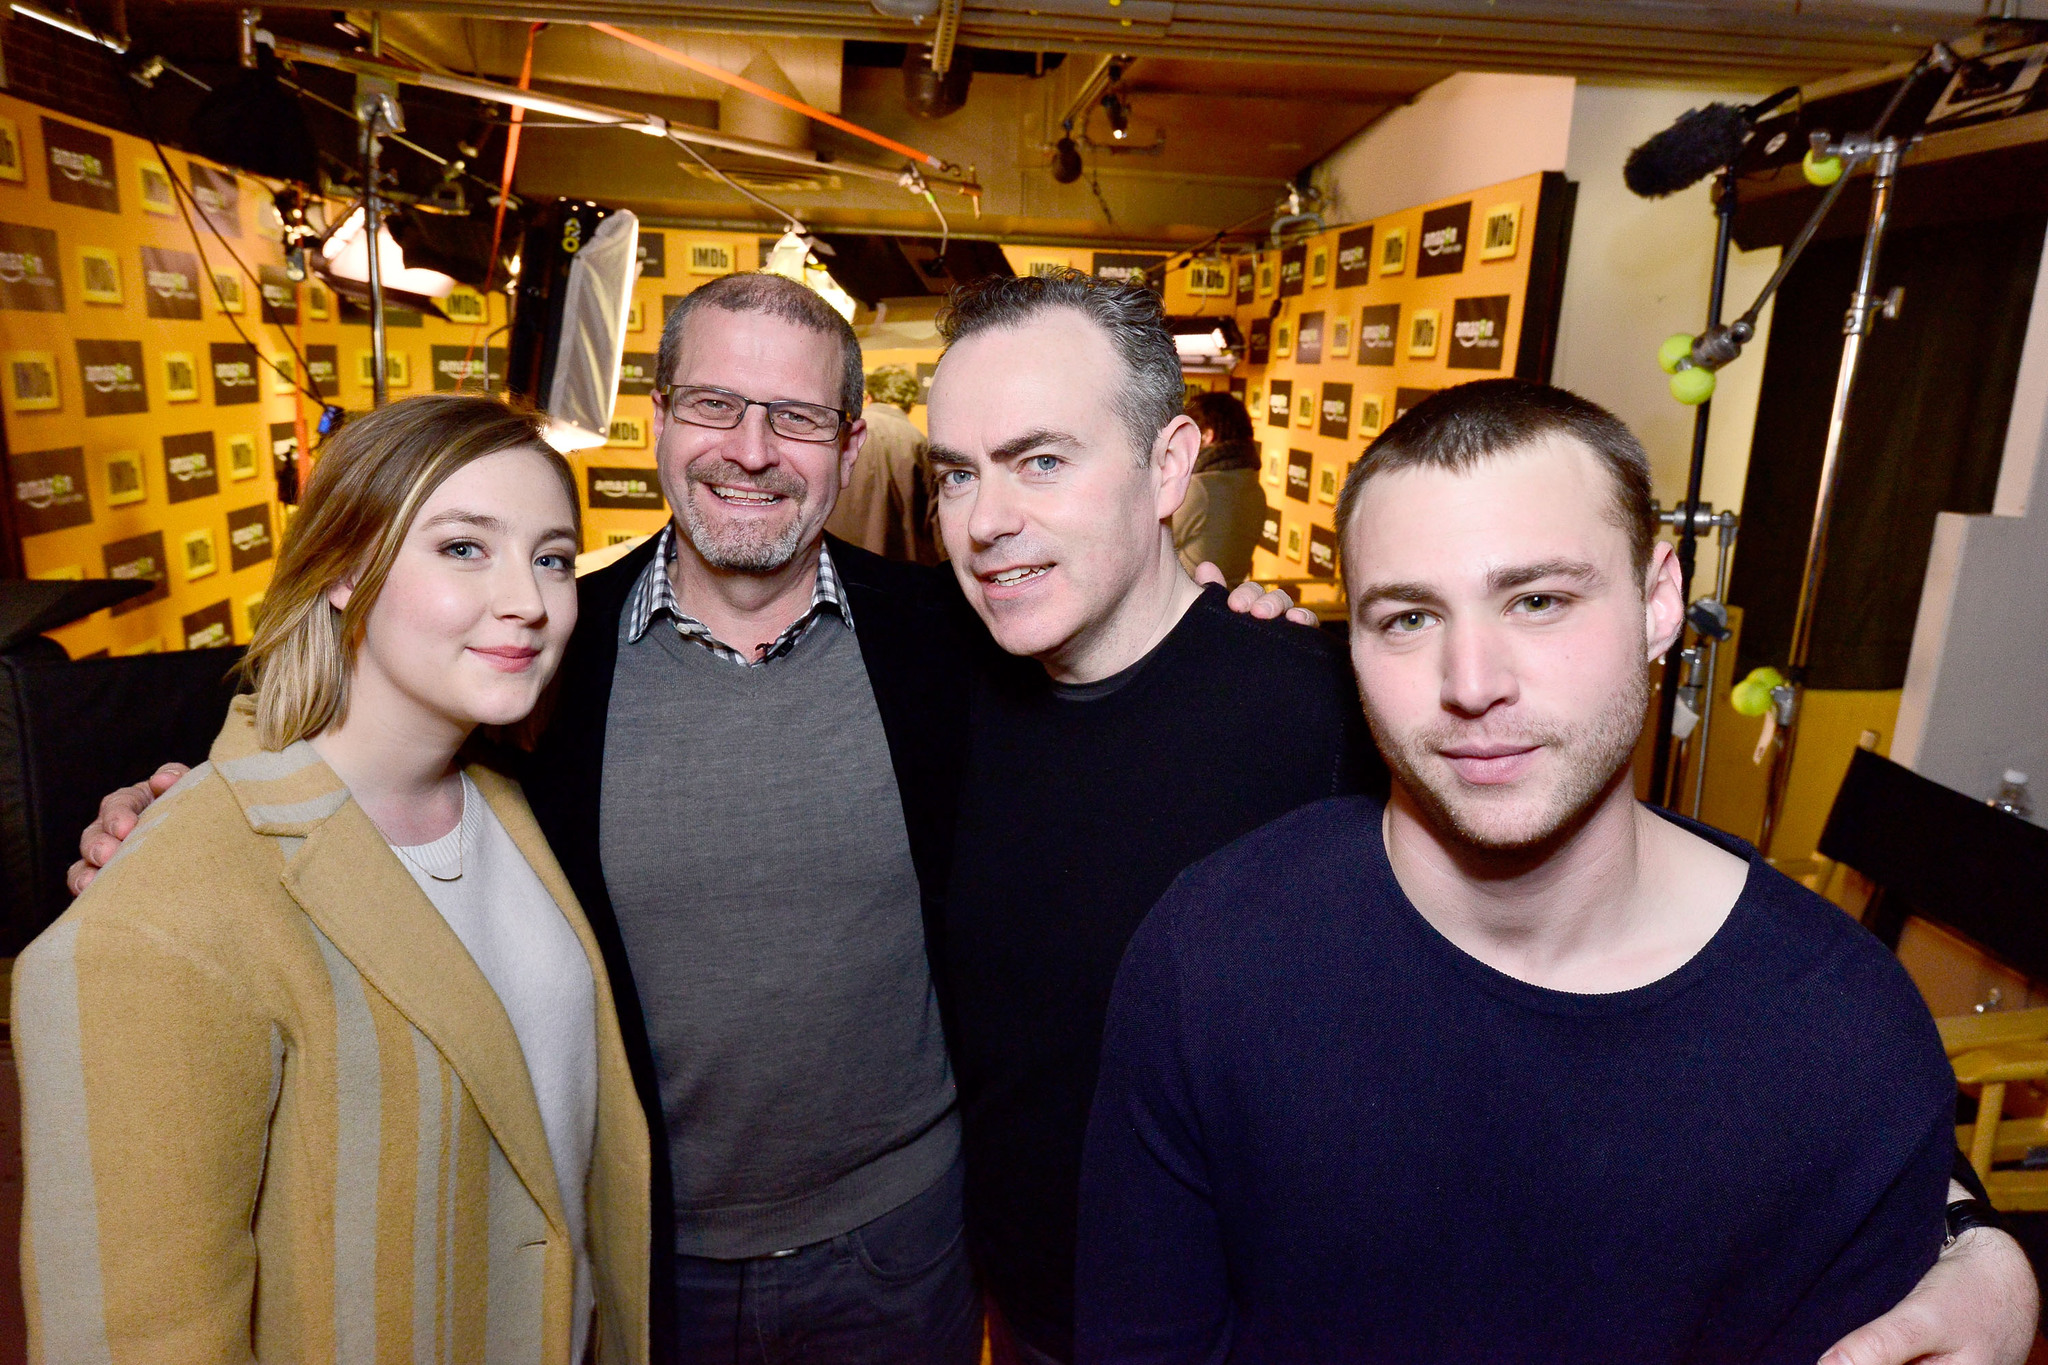 John Crowley, Saoirse Ronan and Emory Cohen at event of IMDb & AIV Studio at Sundance (2015)